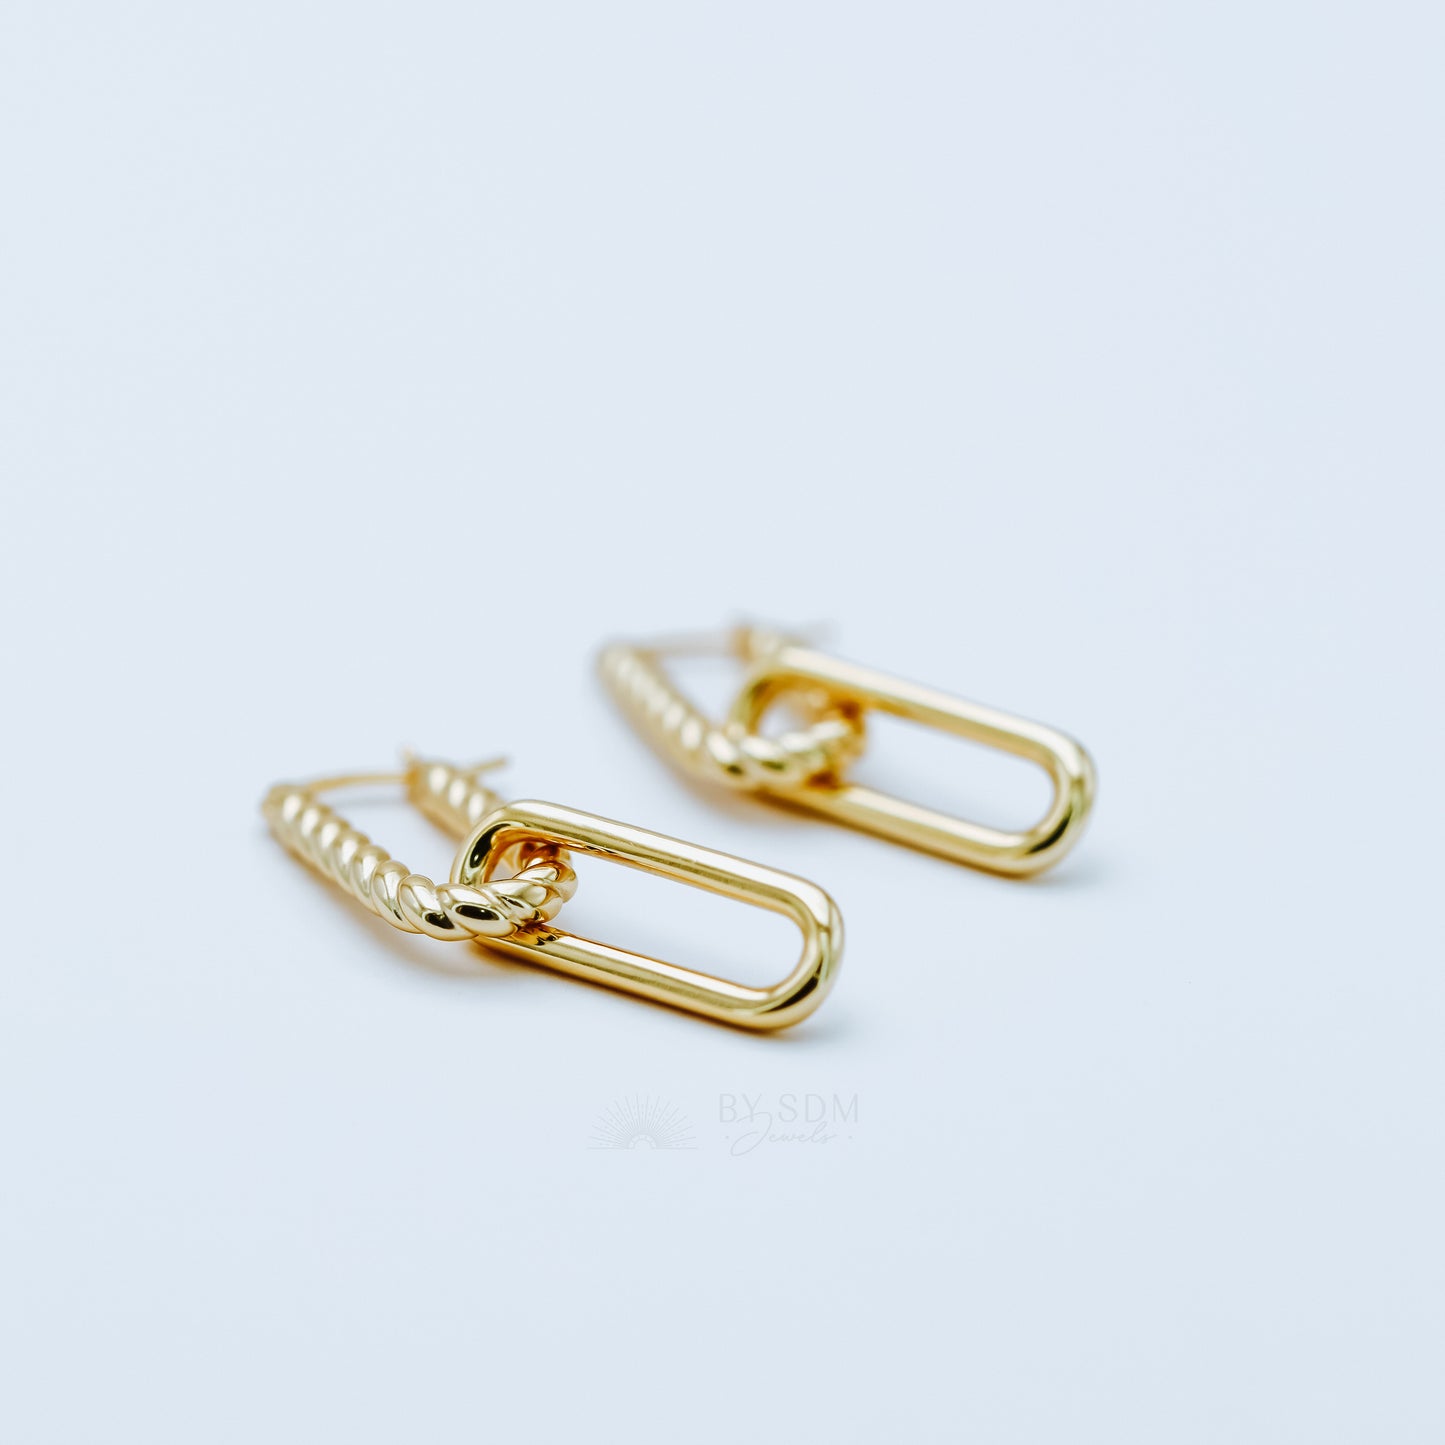 Gold Rectangle Hoops, Gold Link Earrings, Double Hoop Earrings, Dangle Hoop Earrings, Oval Link Hoops, Twisted Hoop Earring